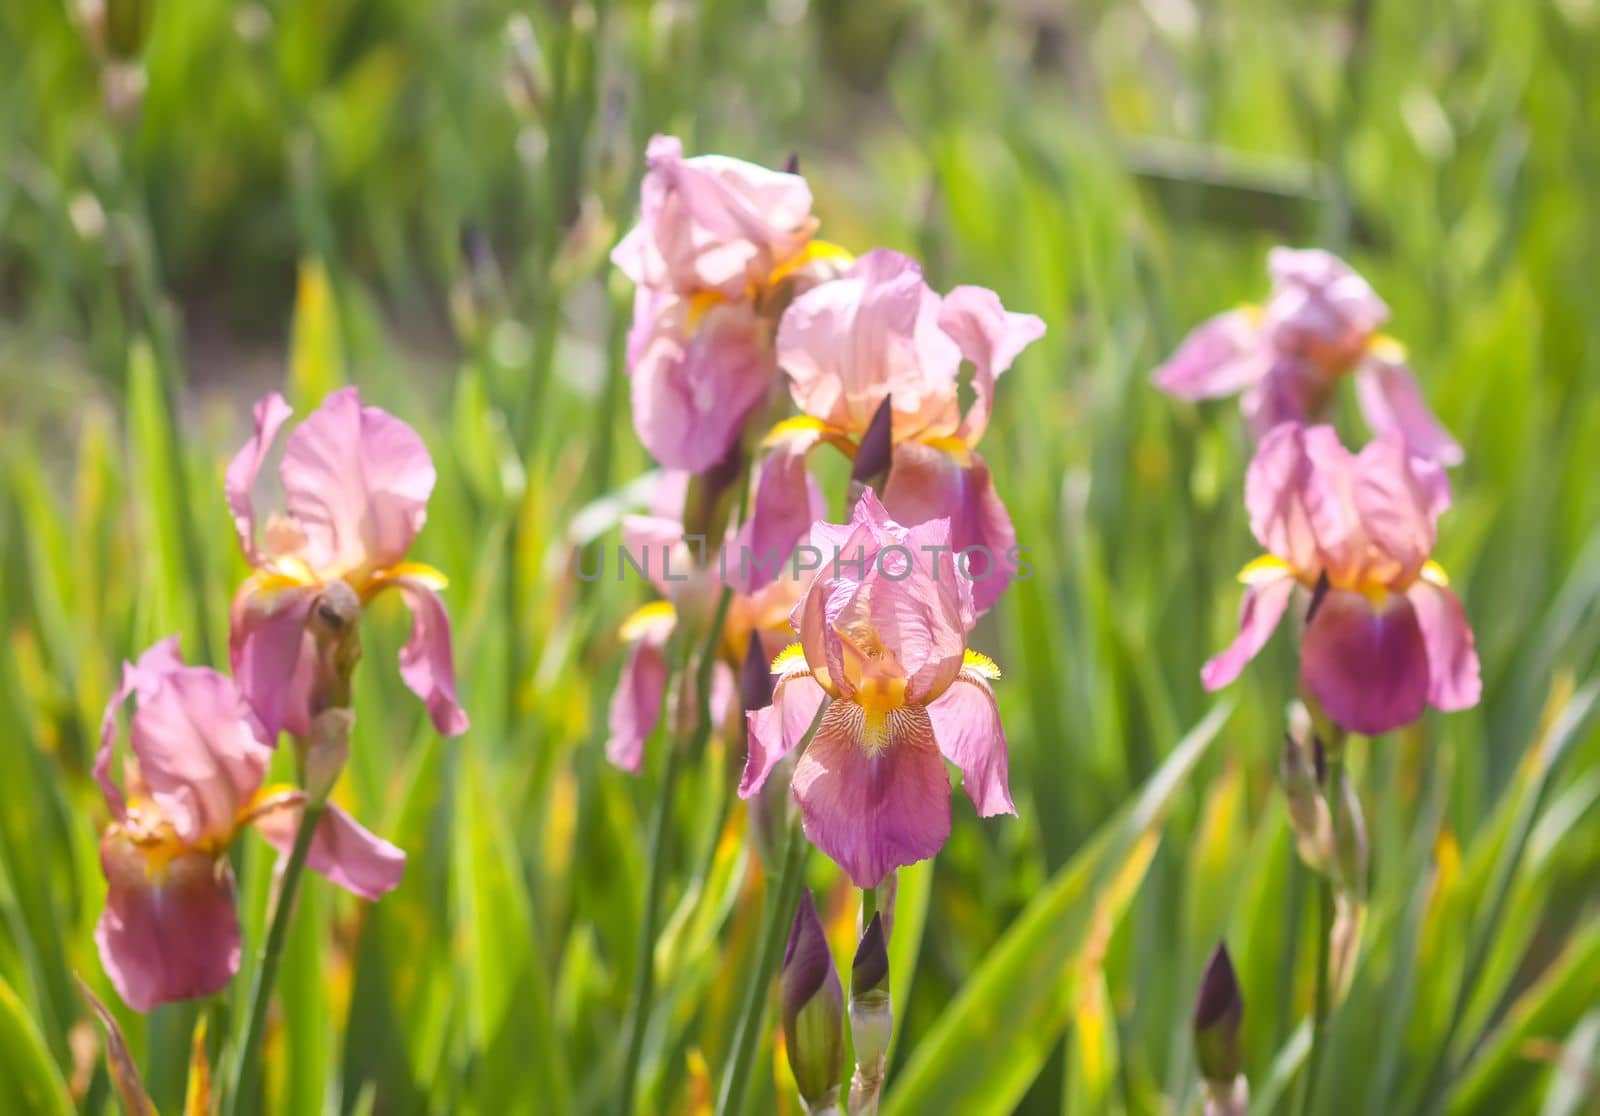 Iris flowers in spring garden. by nightlyviolet